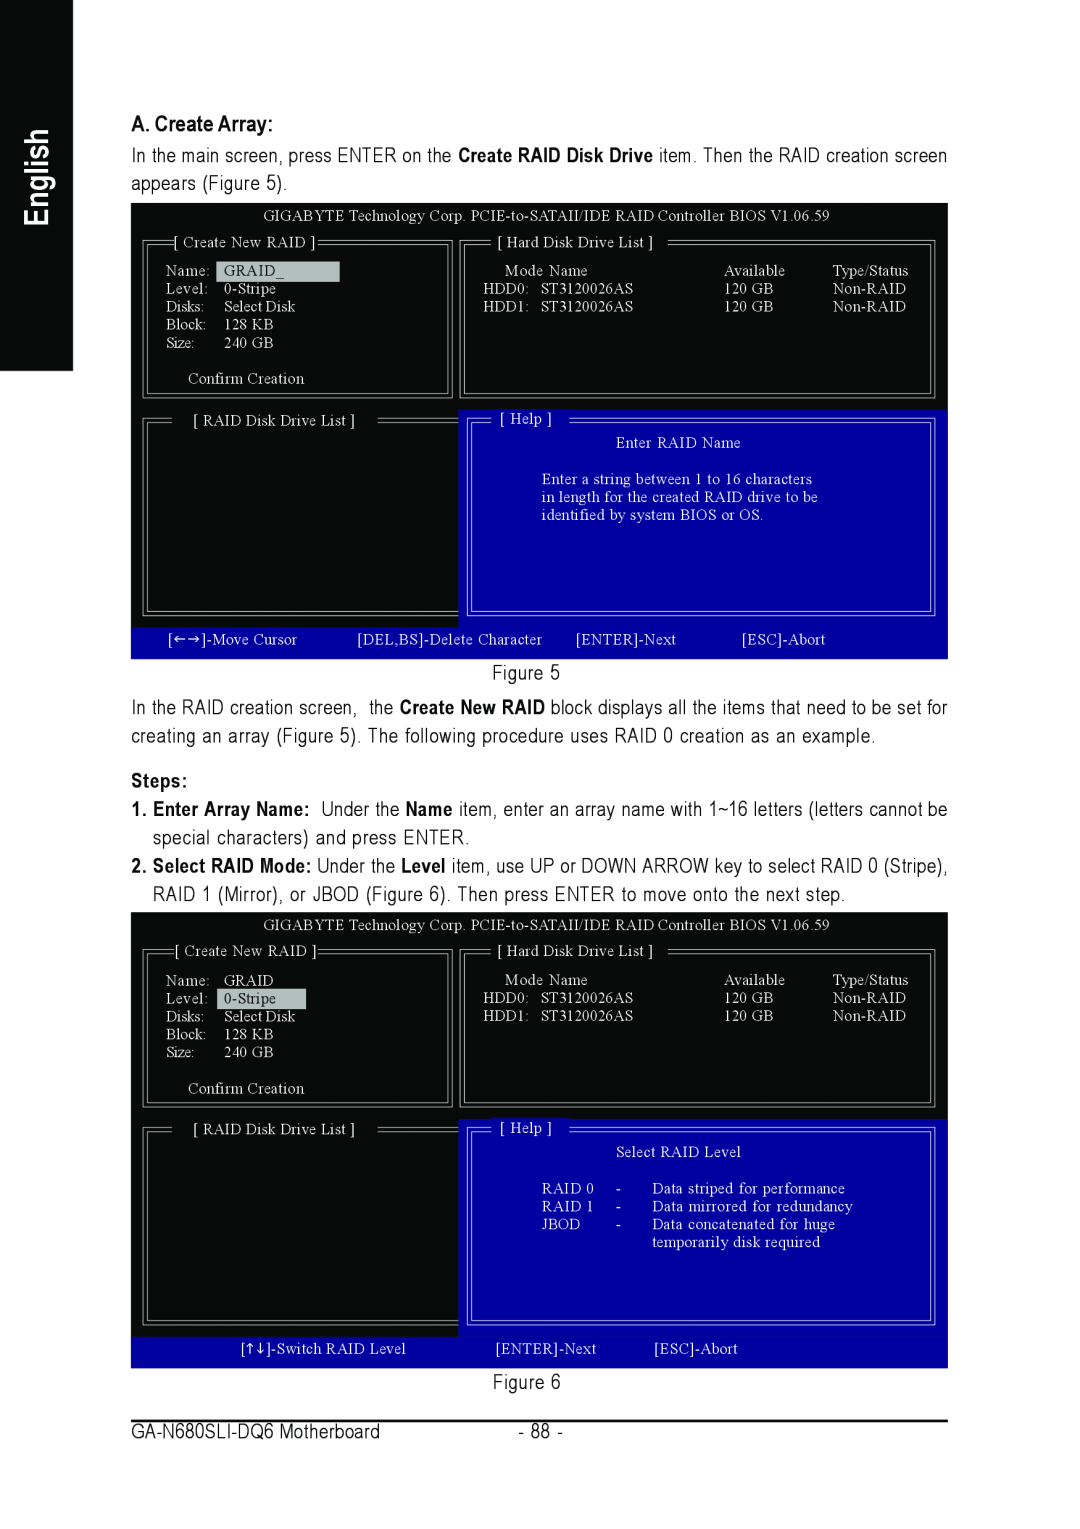 Intel GA-N680SLI-DQ6 user manual A. Create Array, English, Steps 